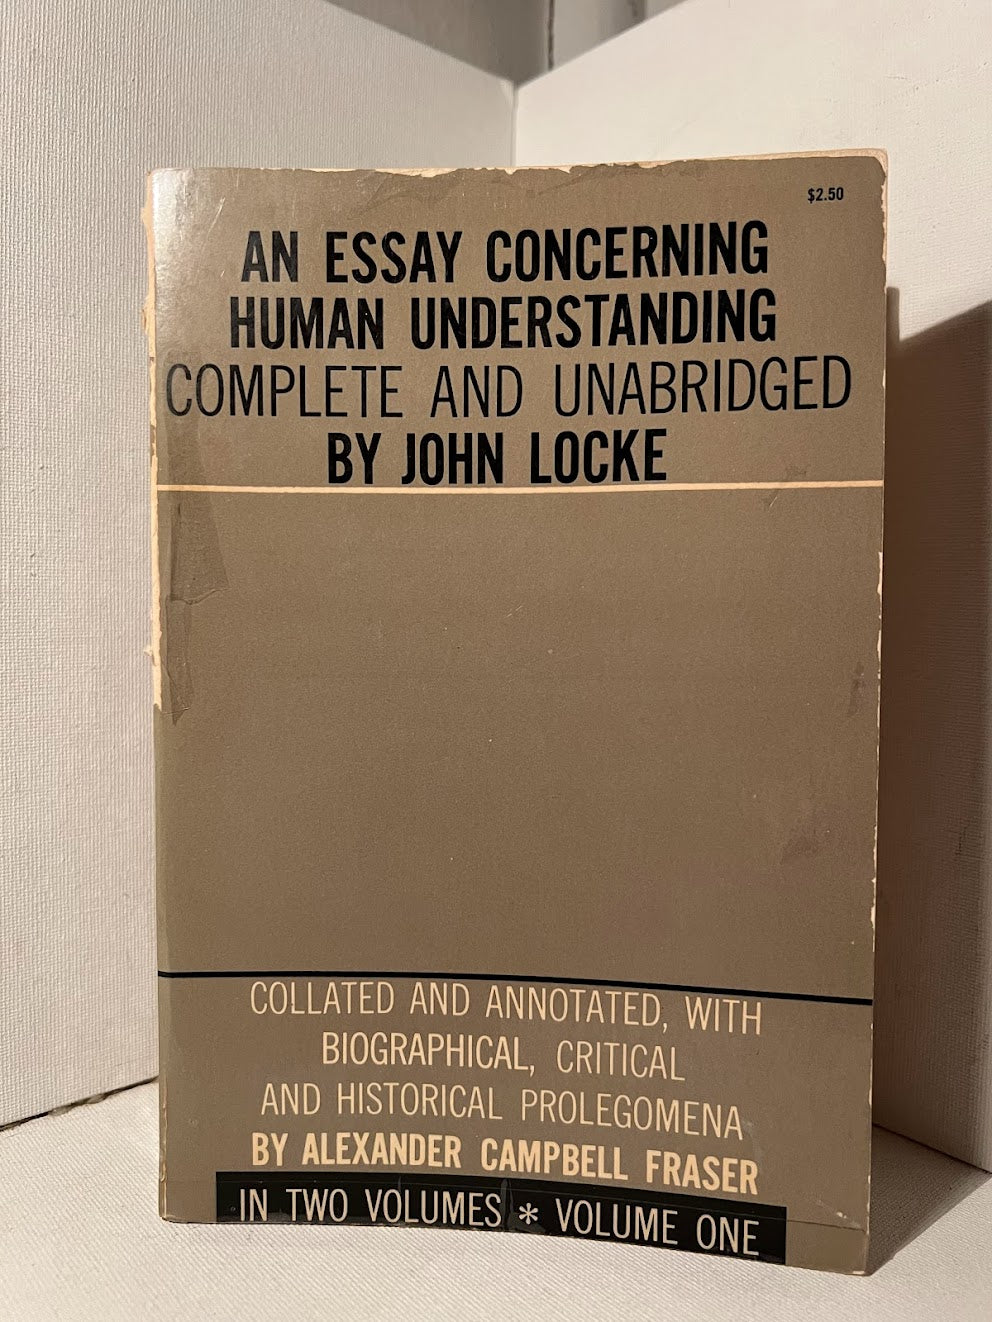 An Essay Concerning Human Understanding by John Locke